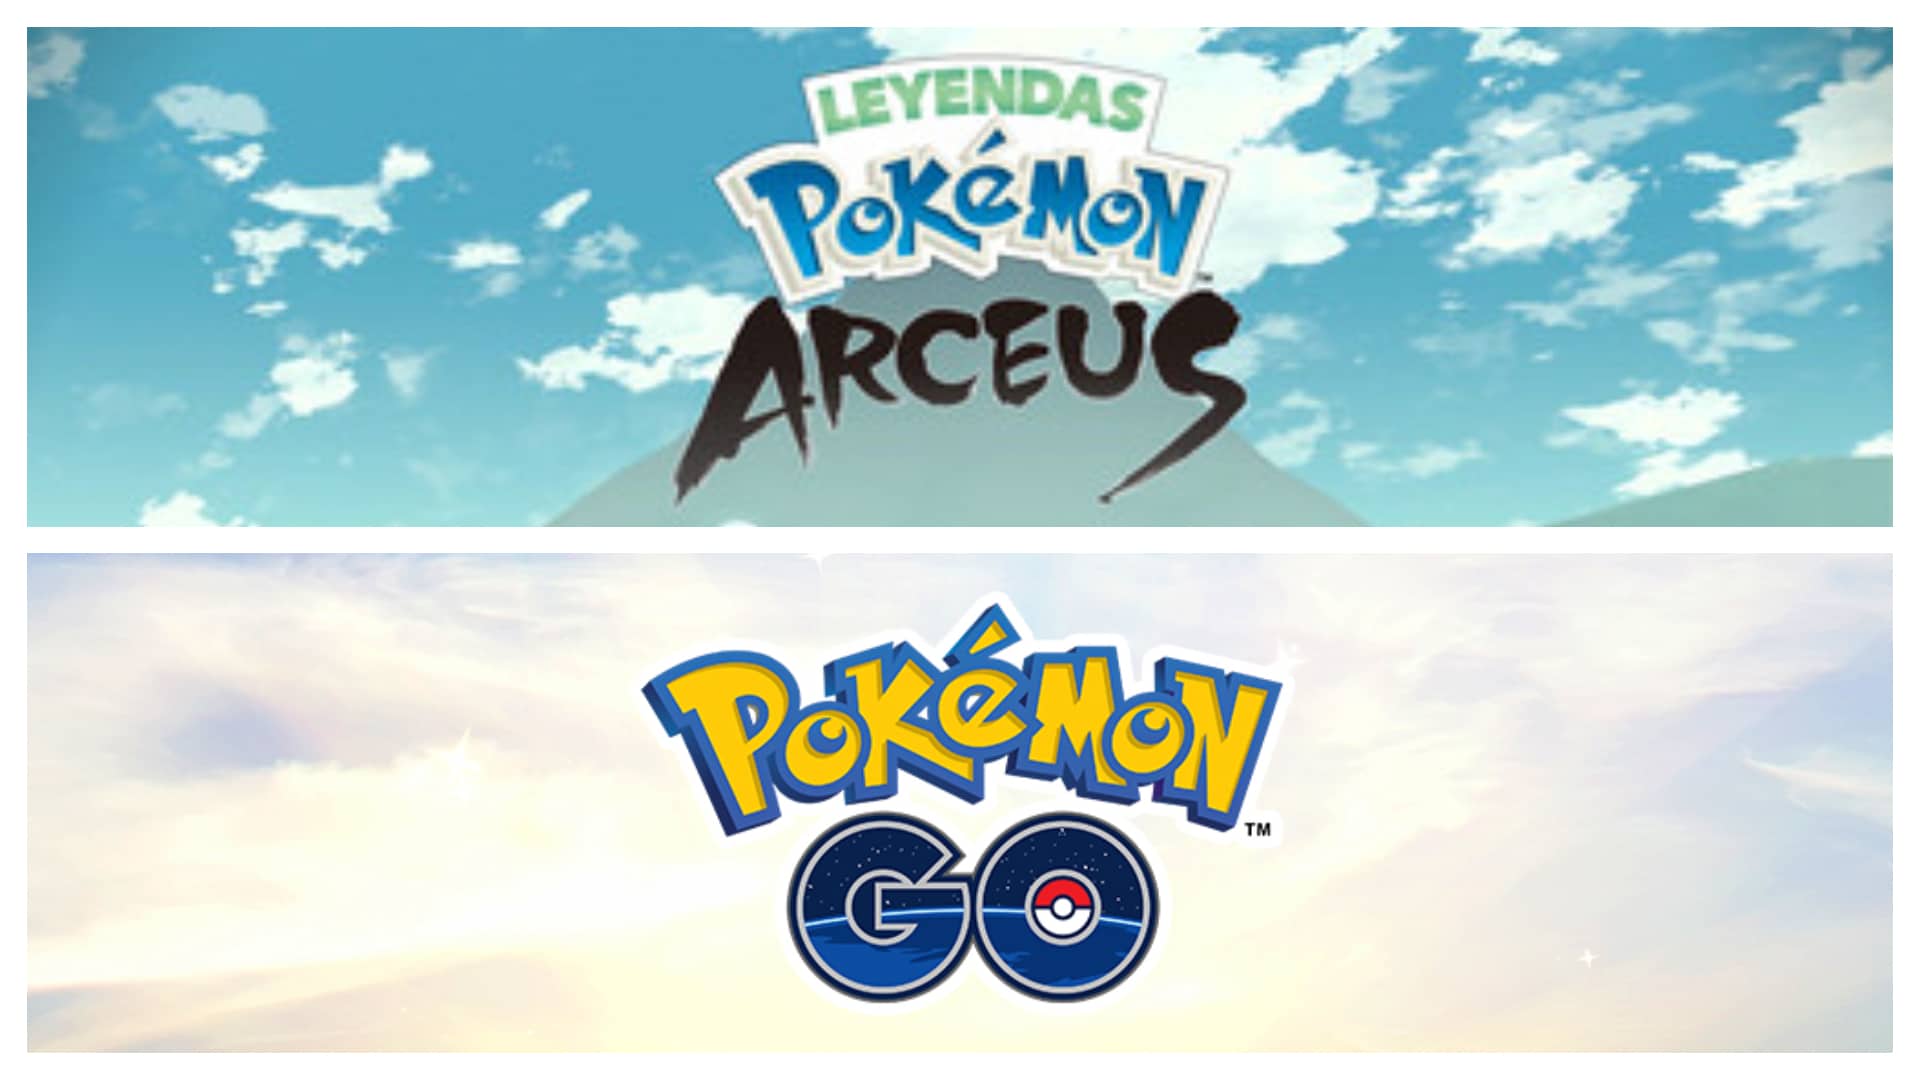 Leyendas Pokémon: Arceus confirma una característica popular de Pokémon GO